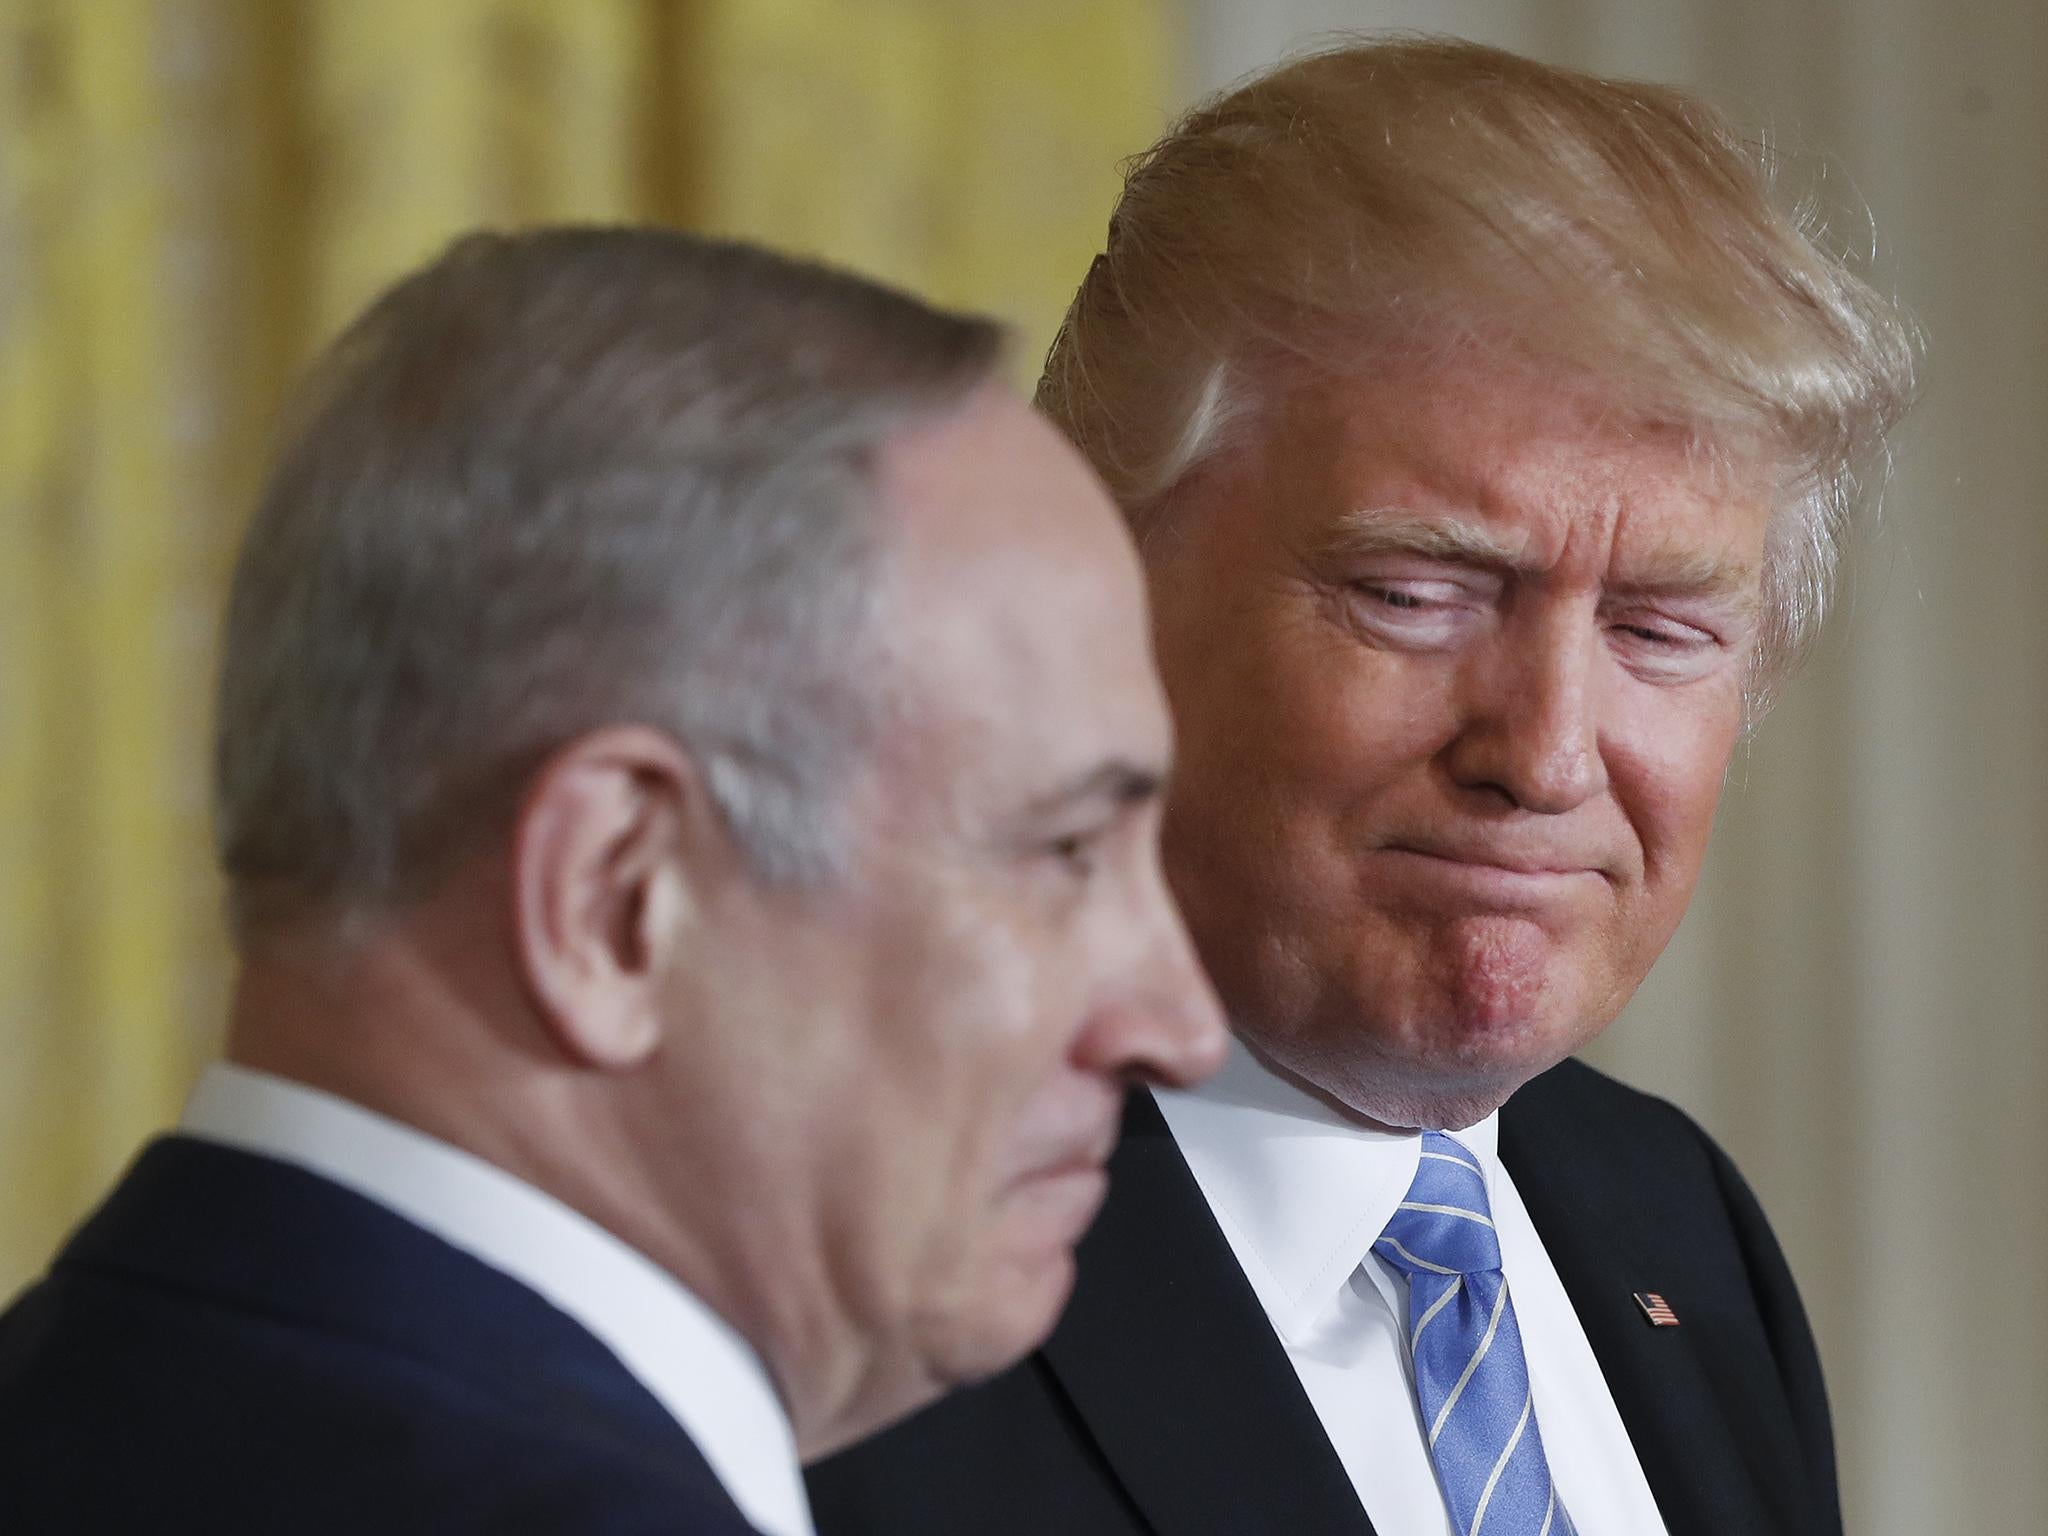 President Trump will meet with the Israeli Prime Minister Benjamin Netanyahu next week